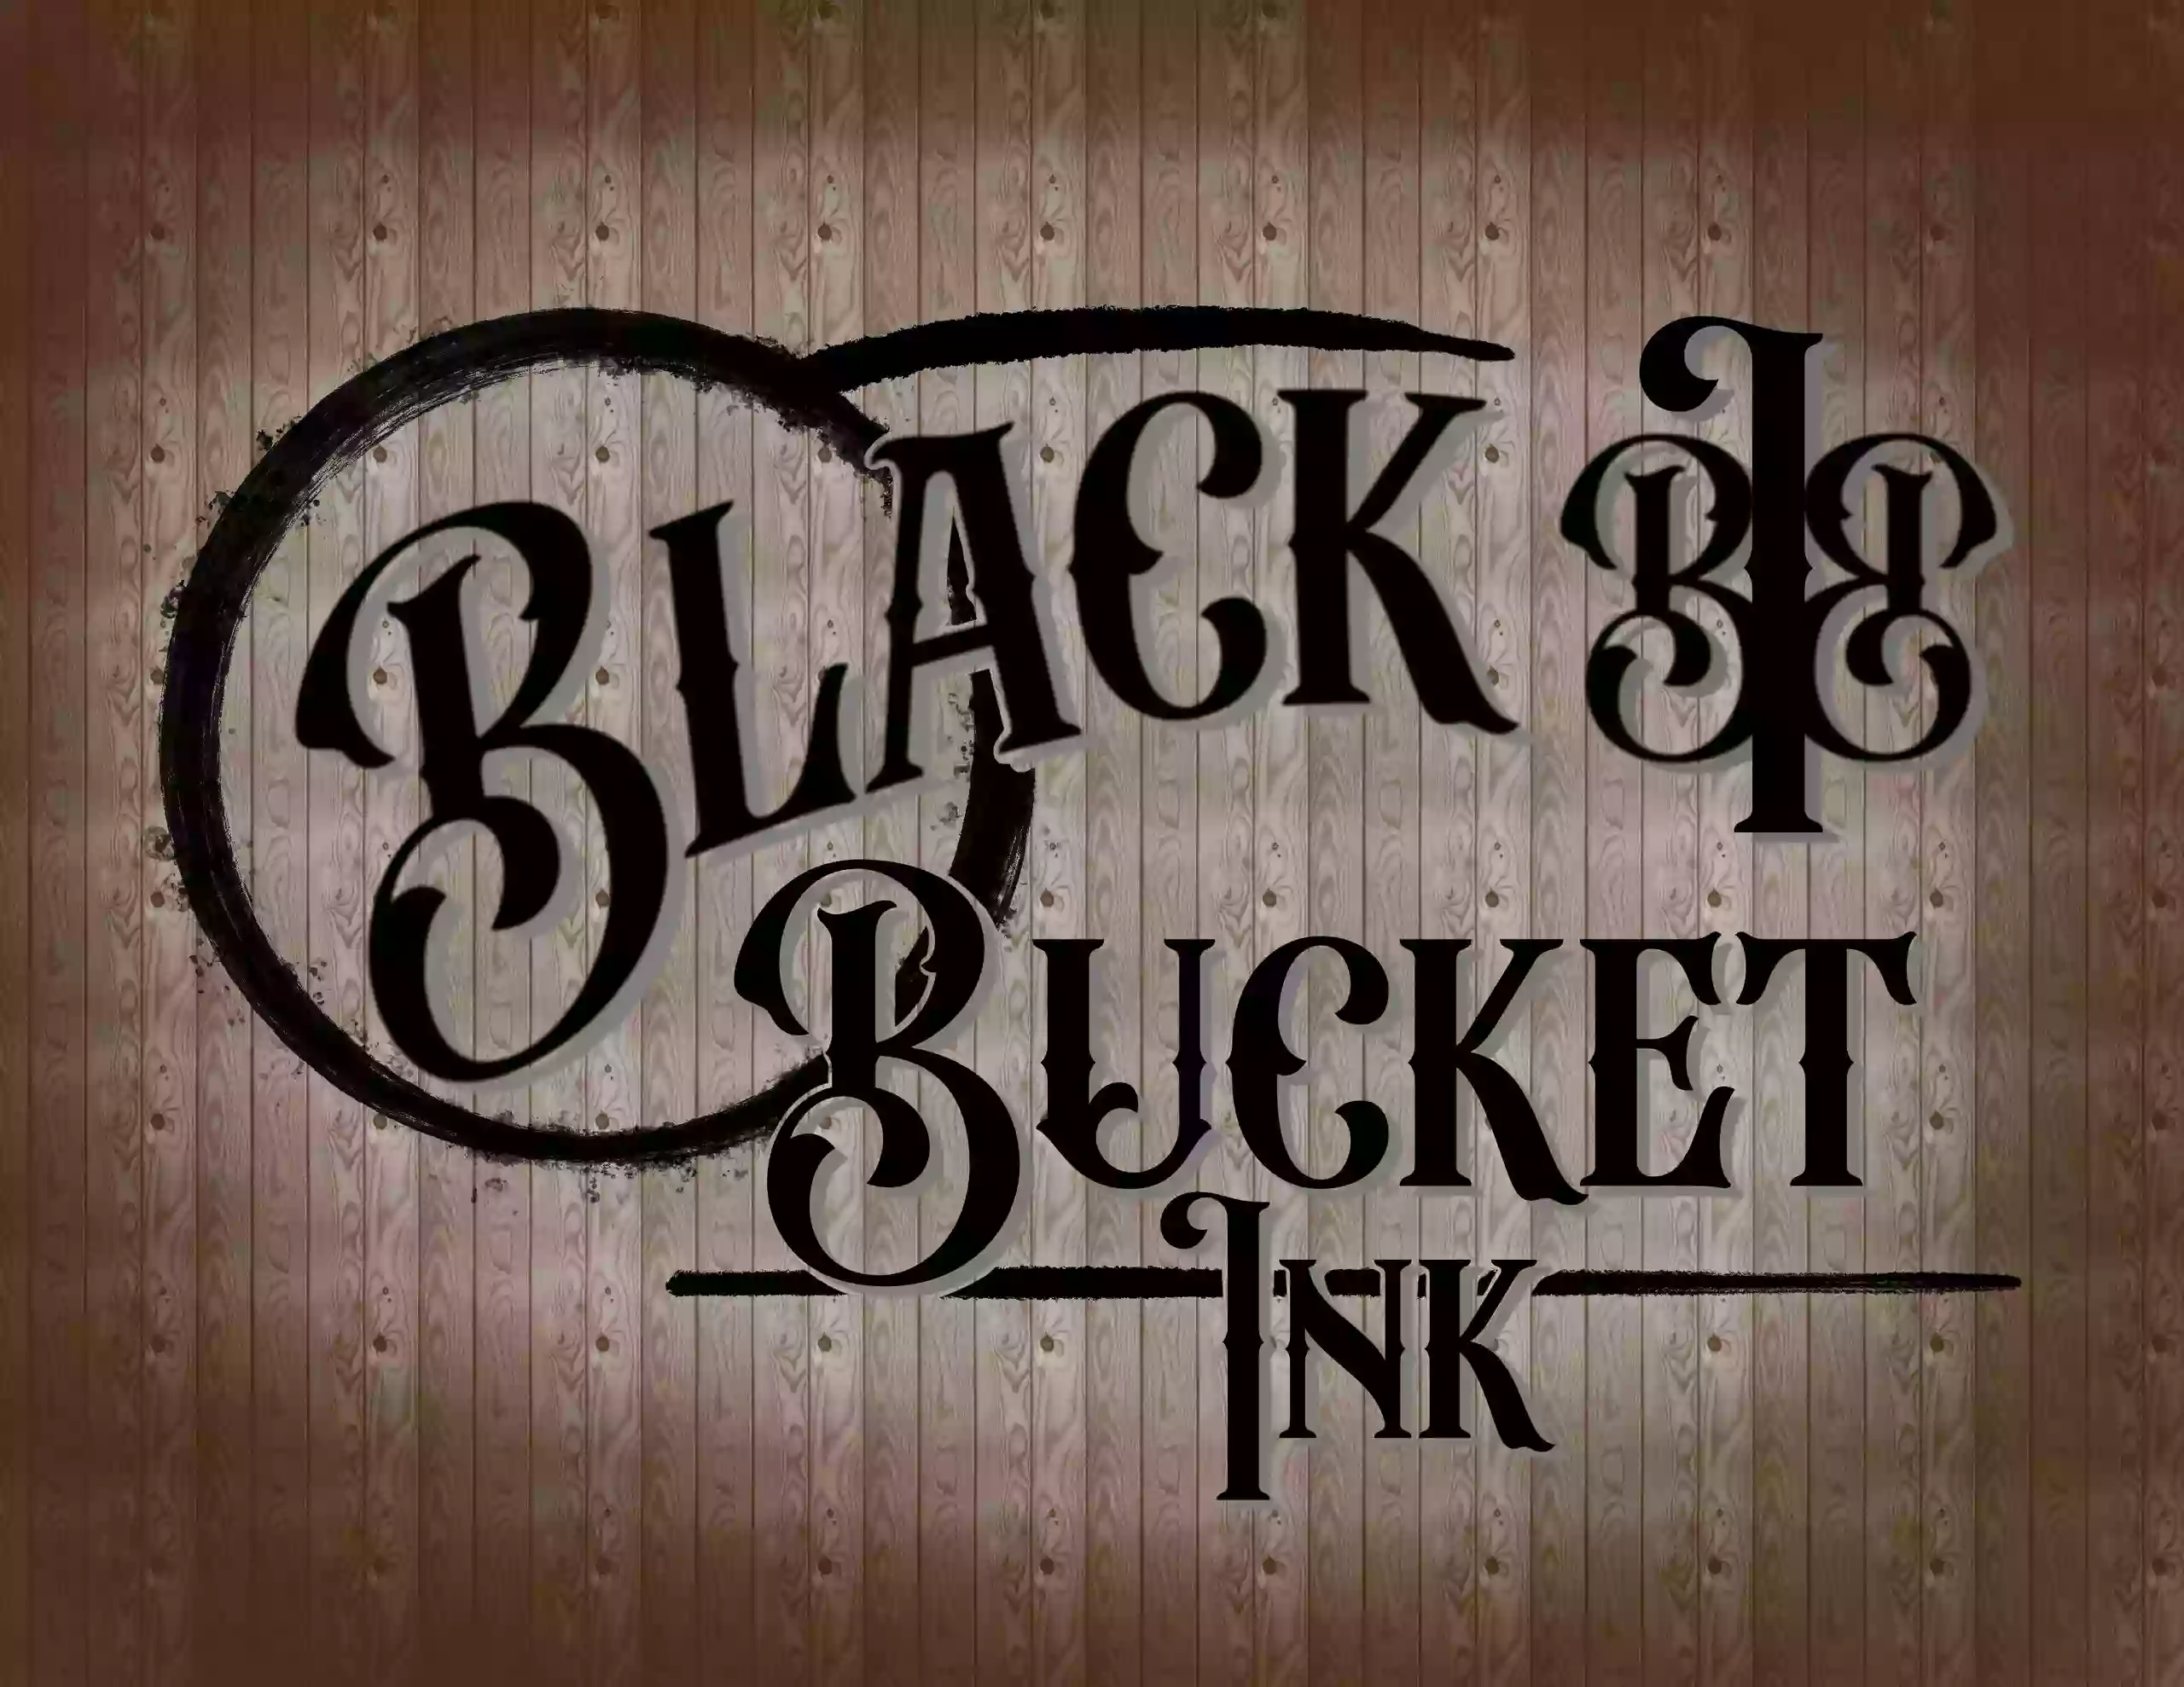 Black Bucket Ink LLC